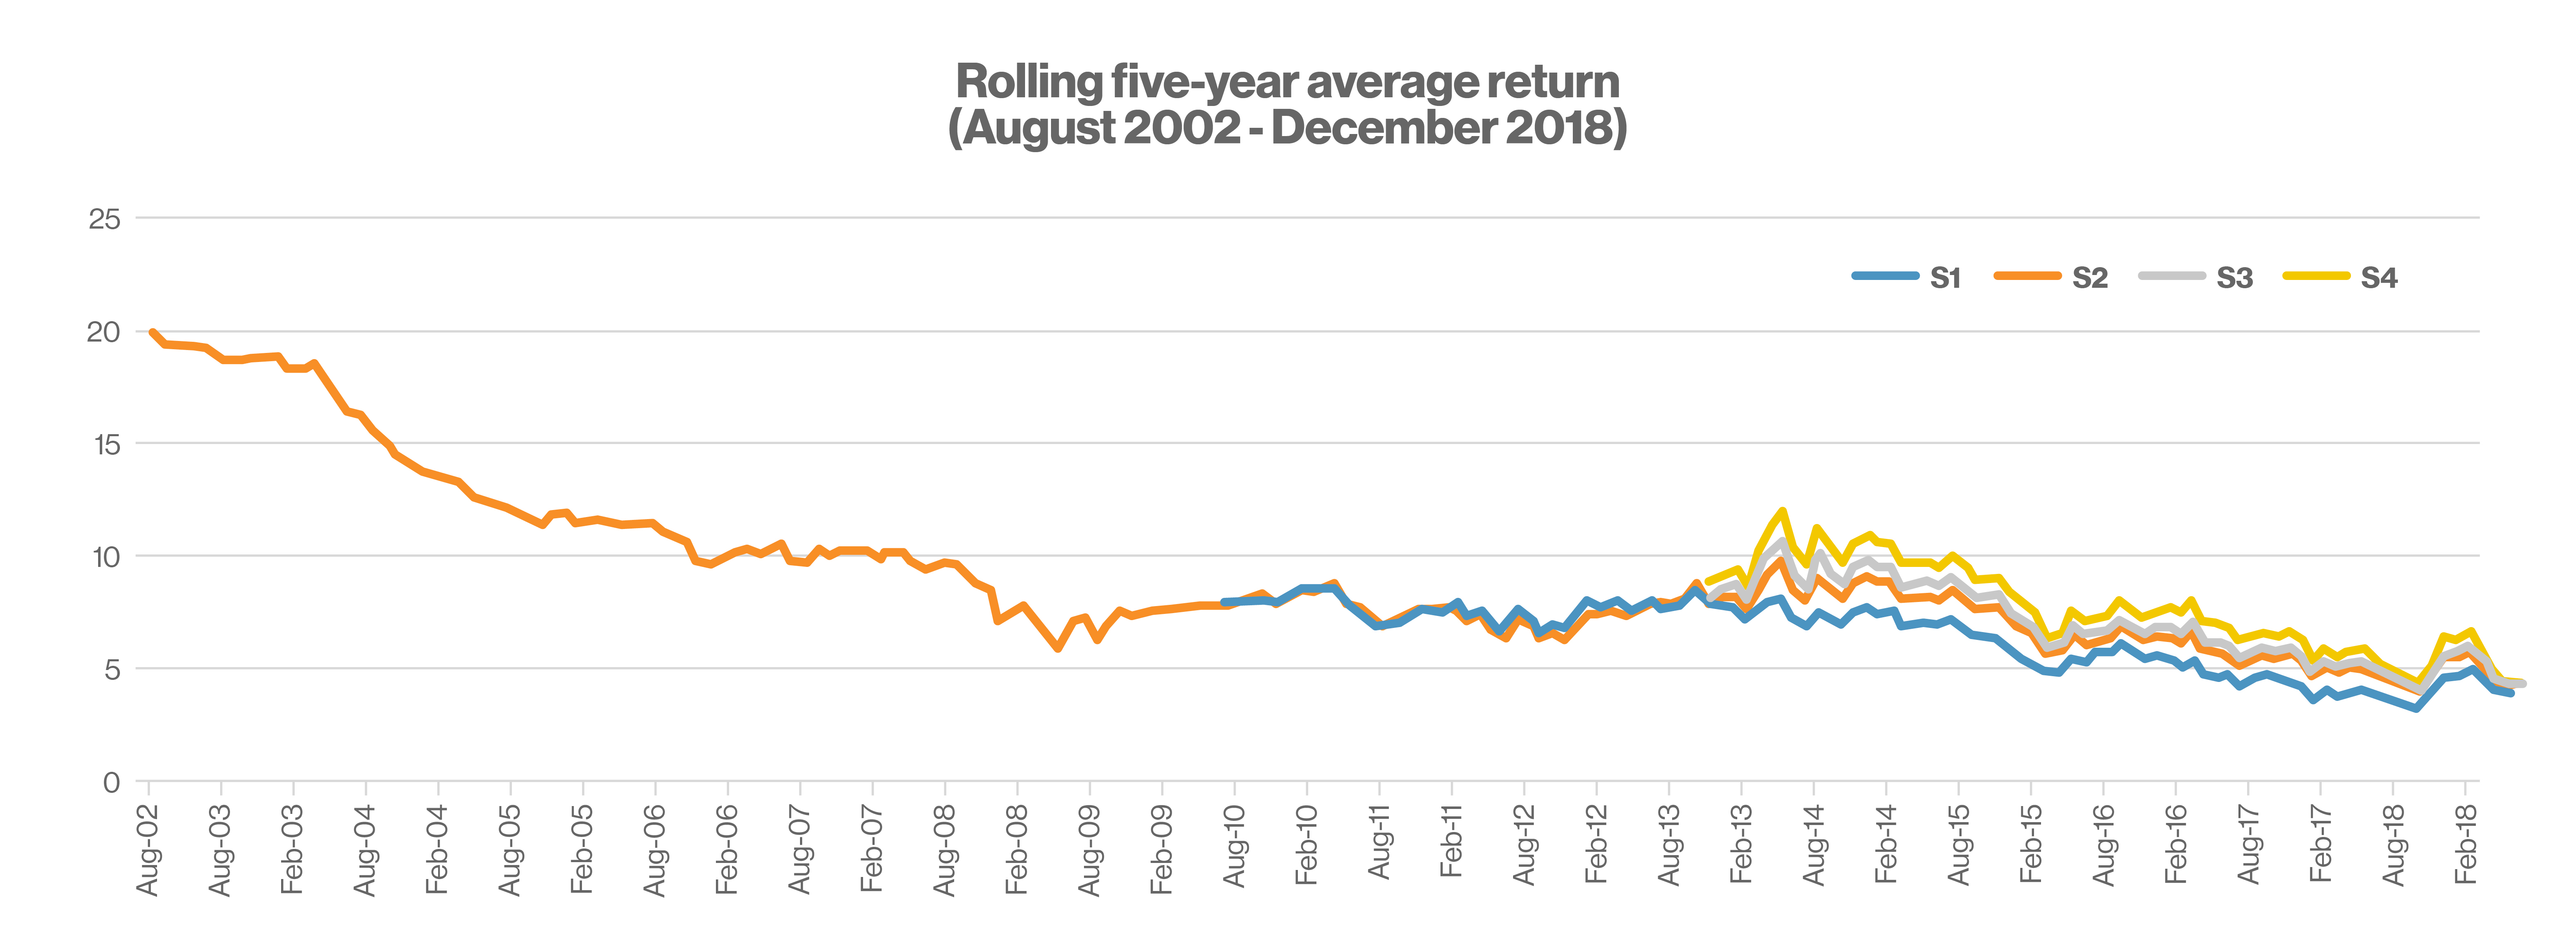 Rolling five-year average return